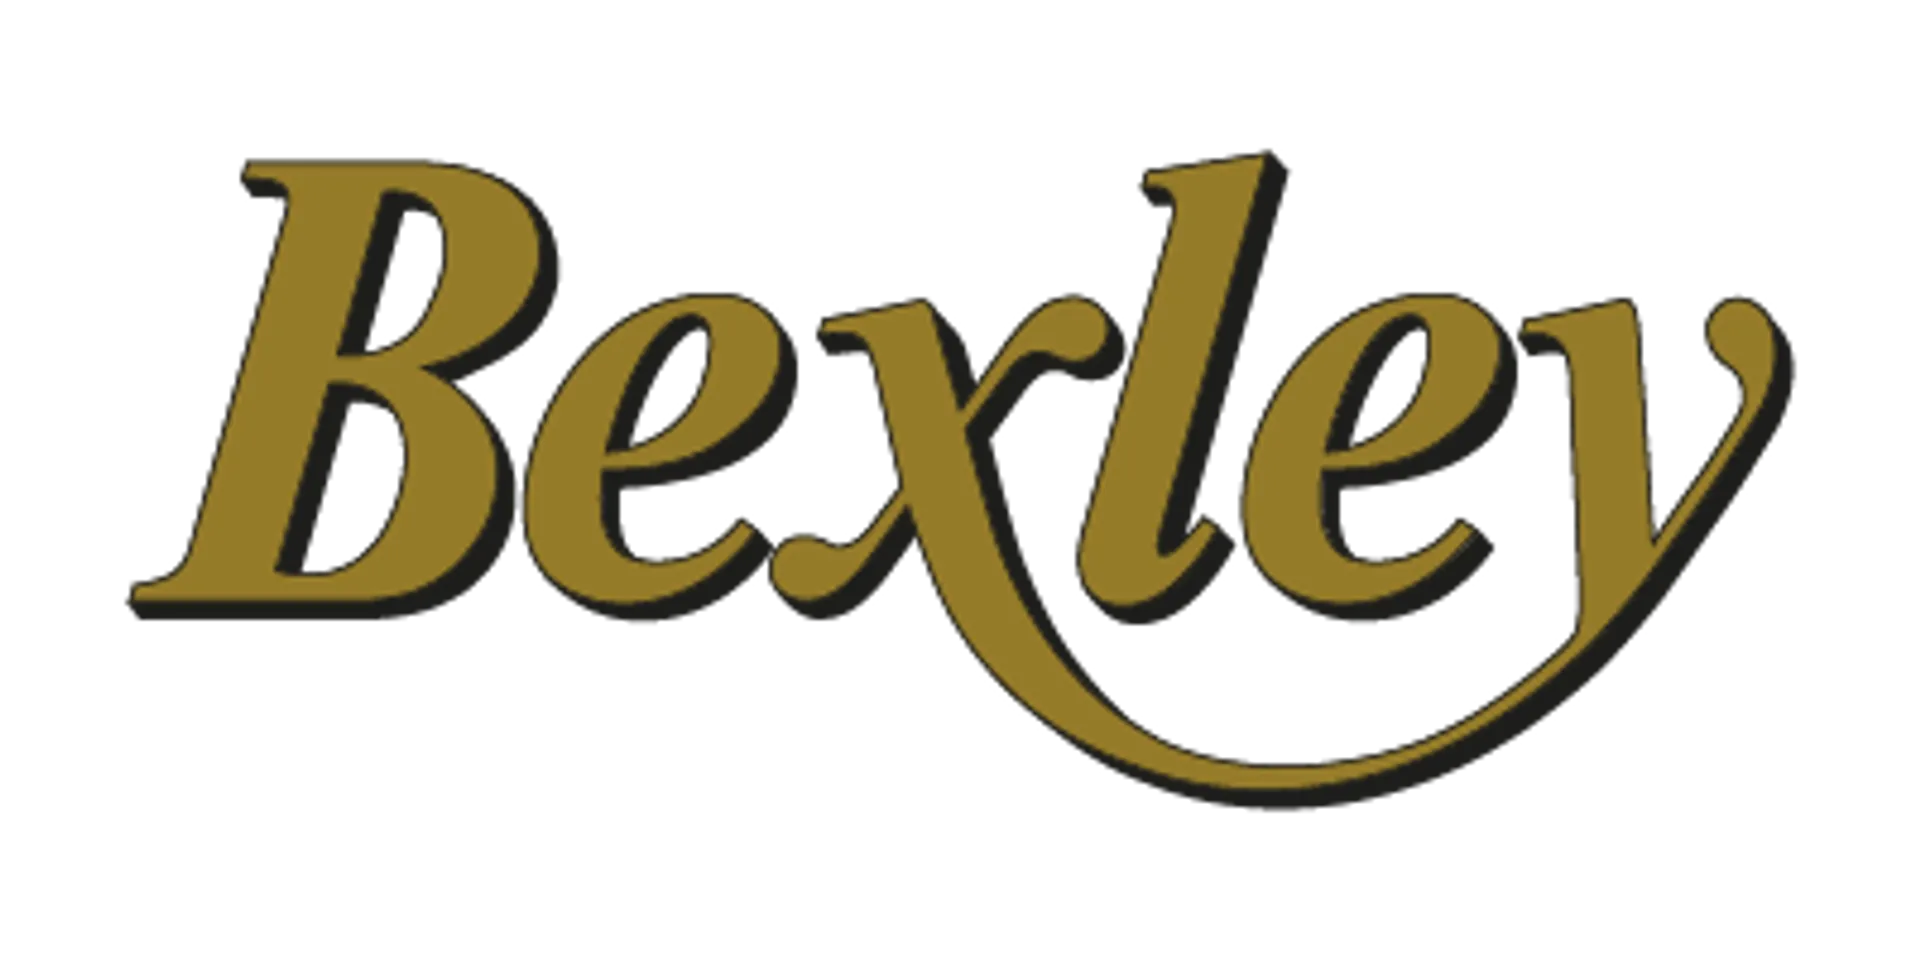 BEXLEY logo du catalogue